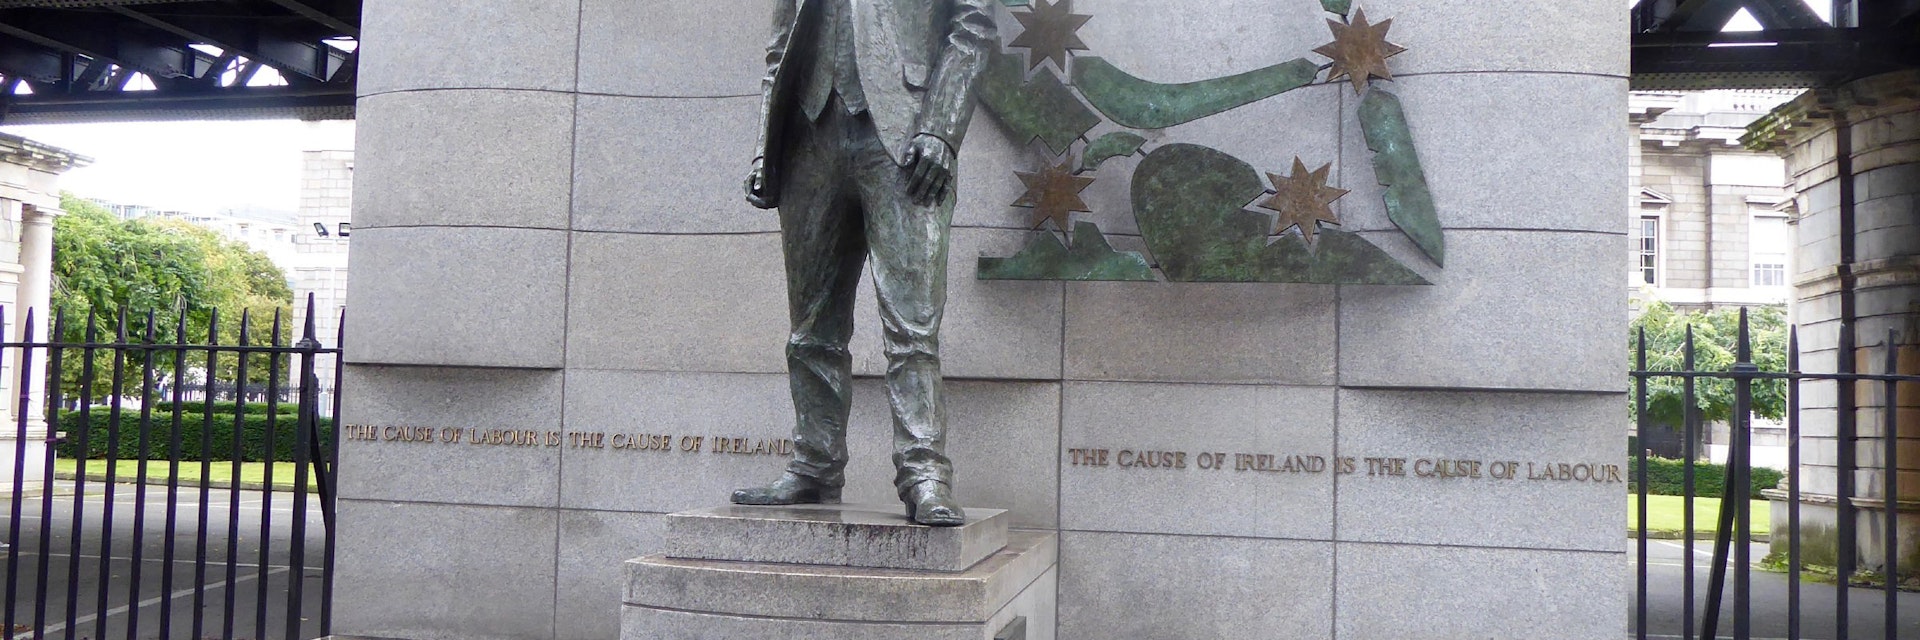 A statue of socialist revolutionary James Connolly in Dublin